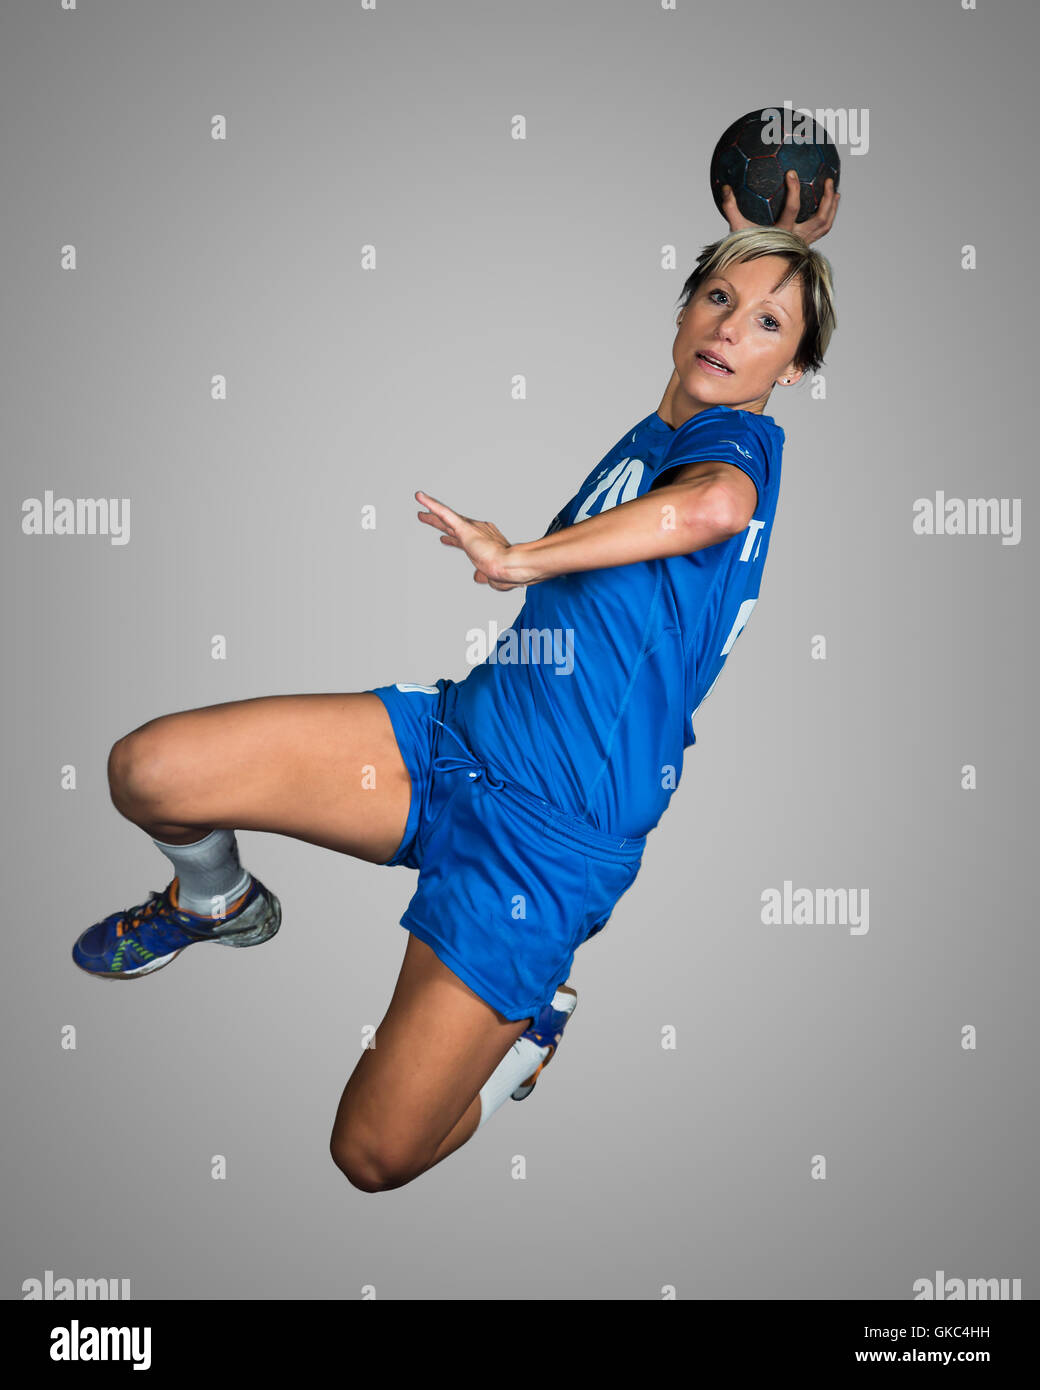 handball in the jump shot Stock Photo